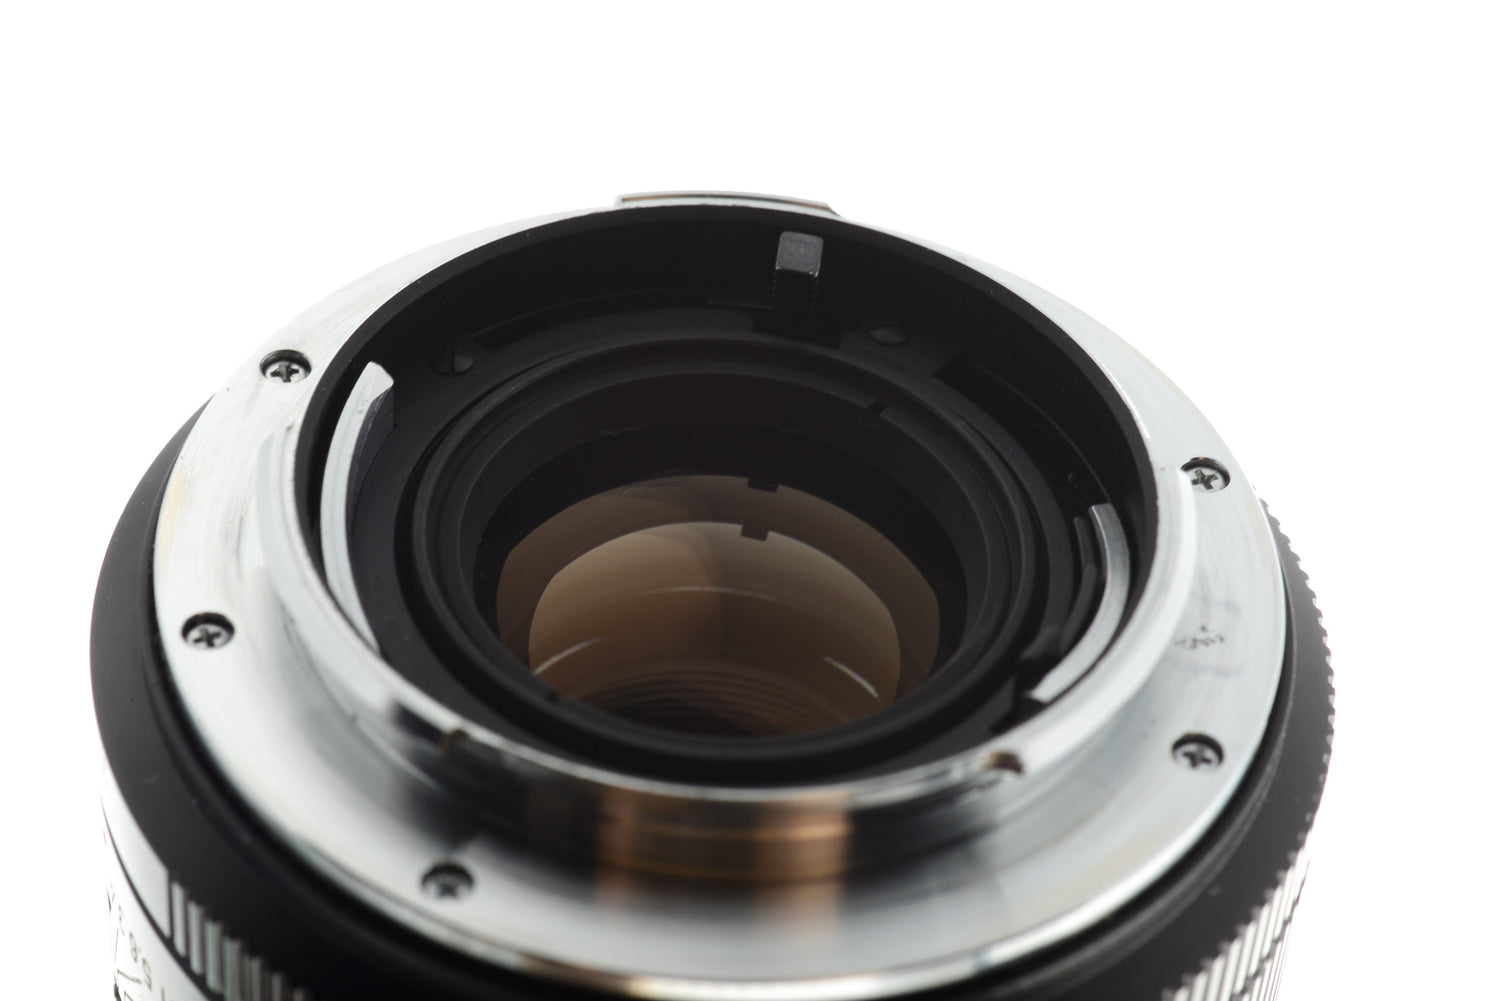 Leica 180mm f3.4 APO-Telyt-R (3-cam) – Kamerastore